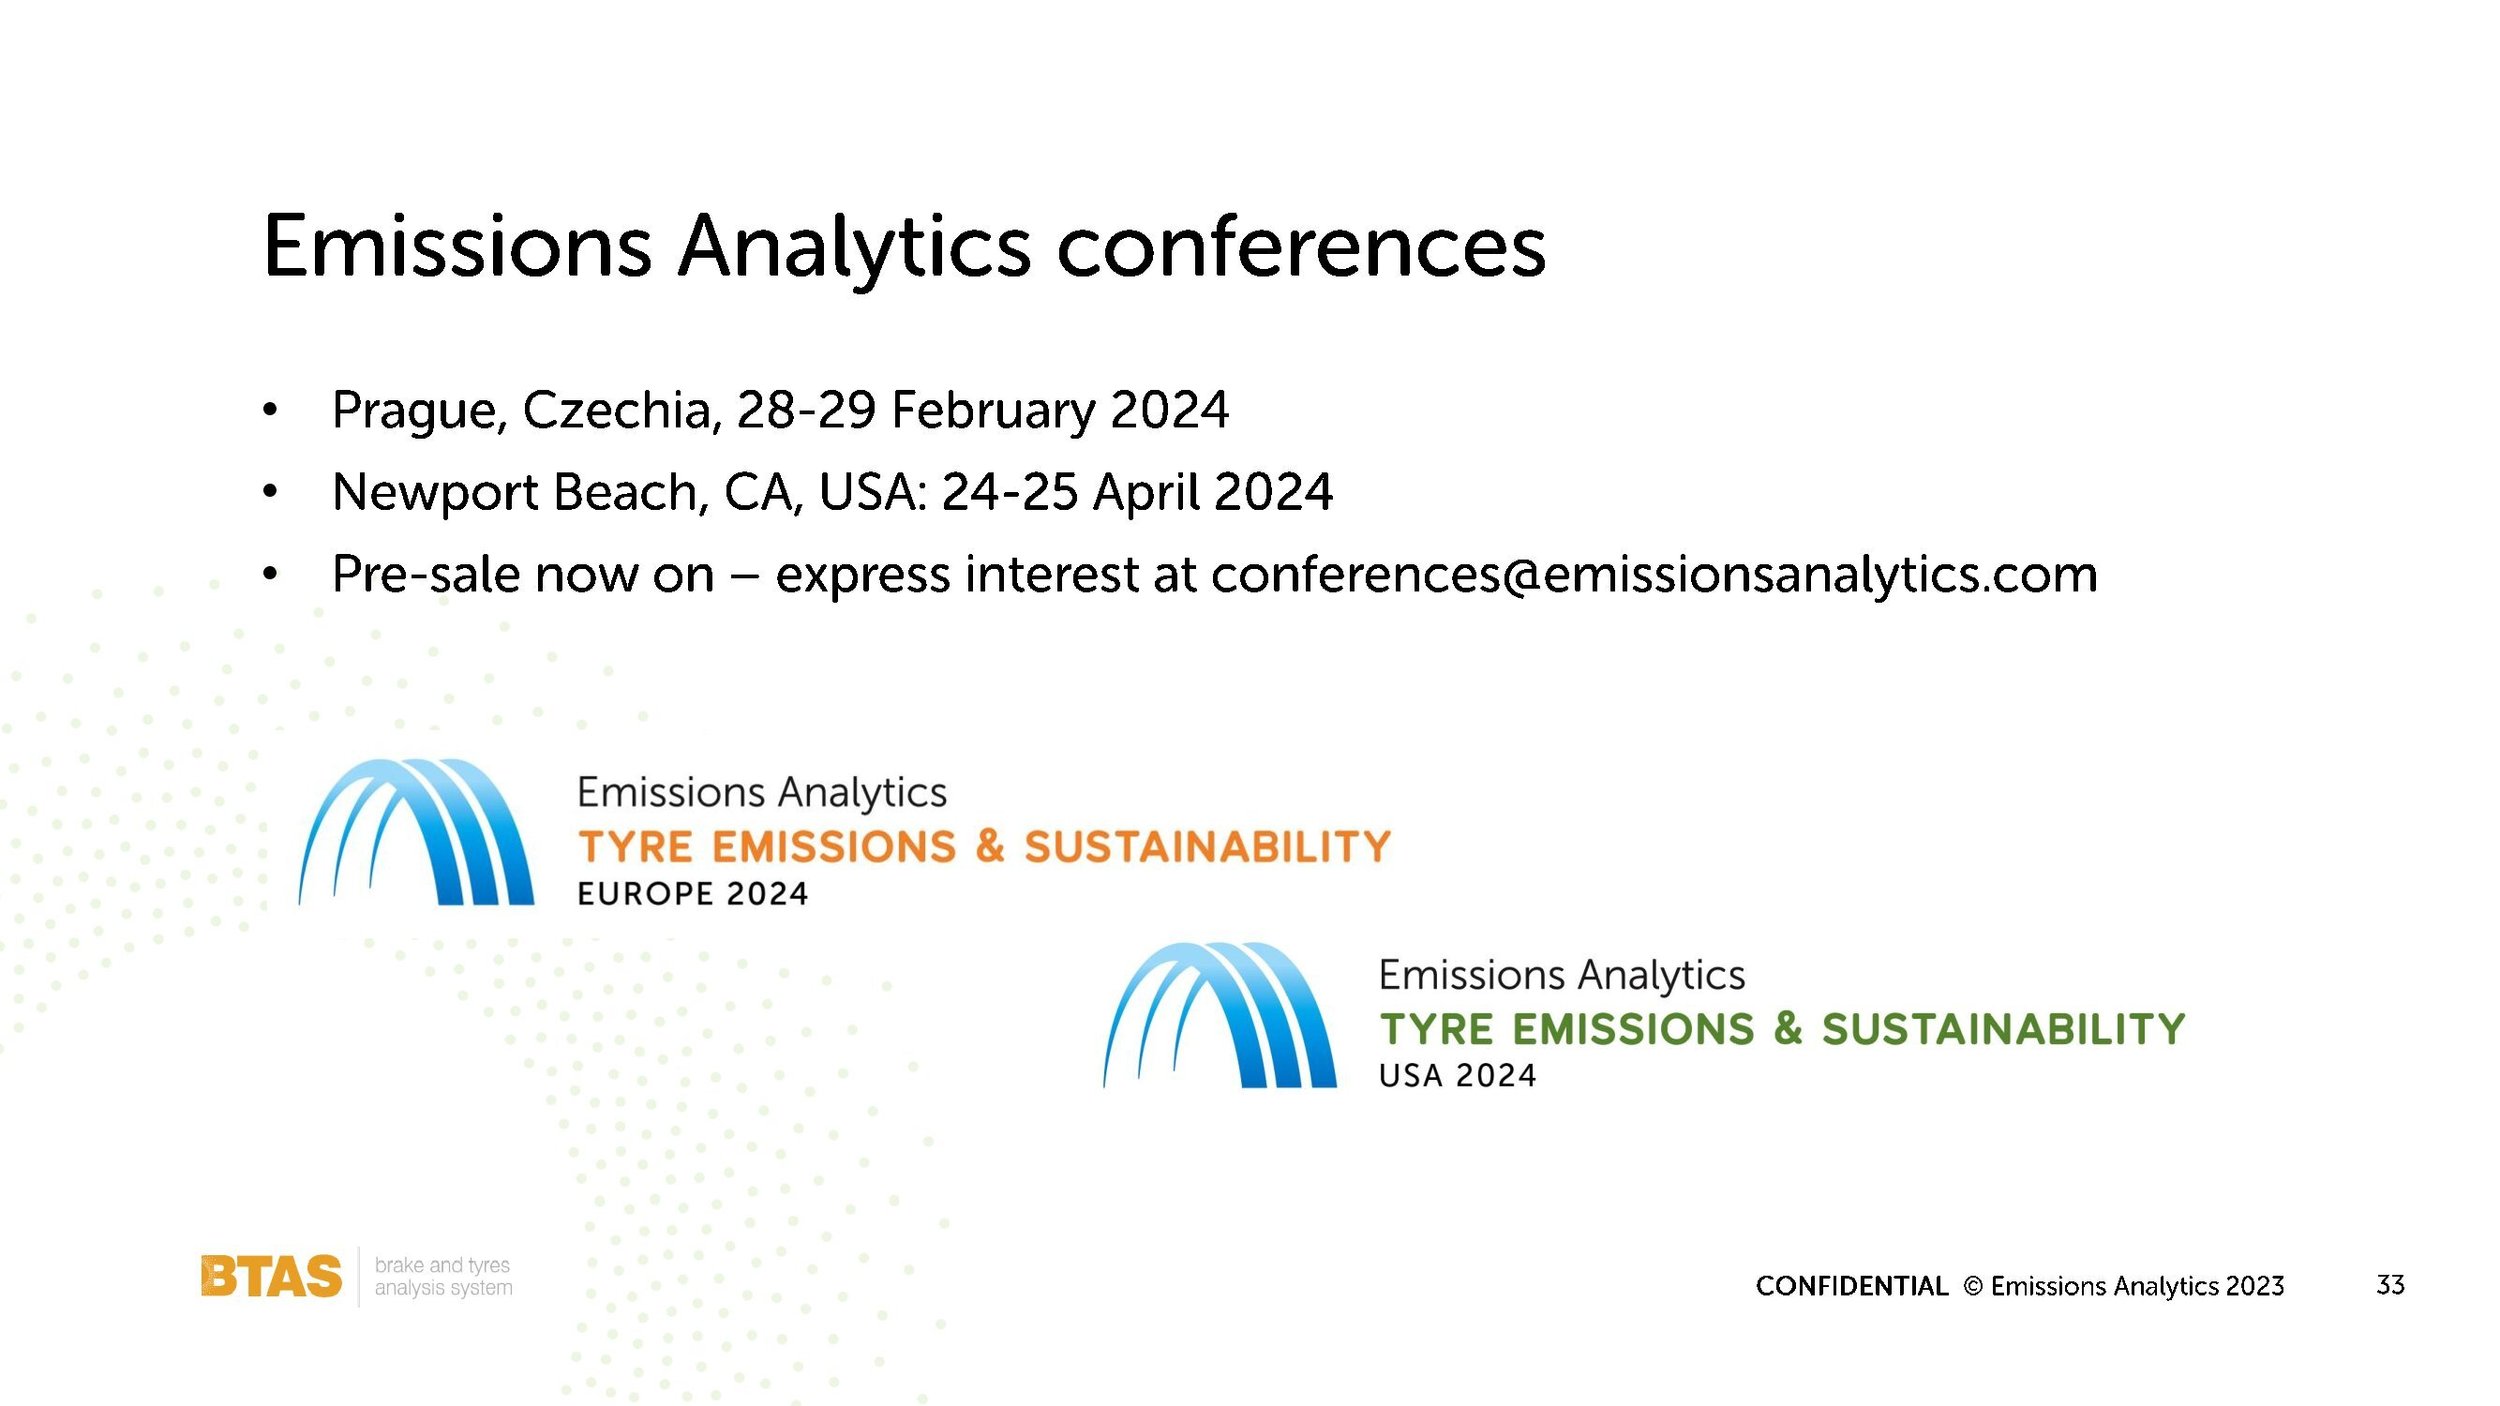 Emissions Analytics tyres webinar 19 September 2023_00033.jpg